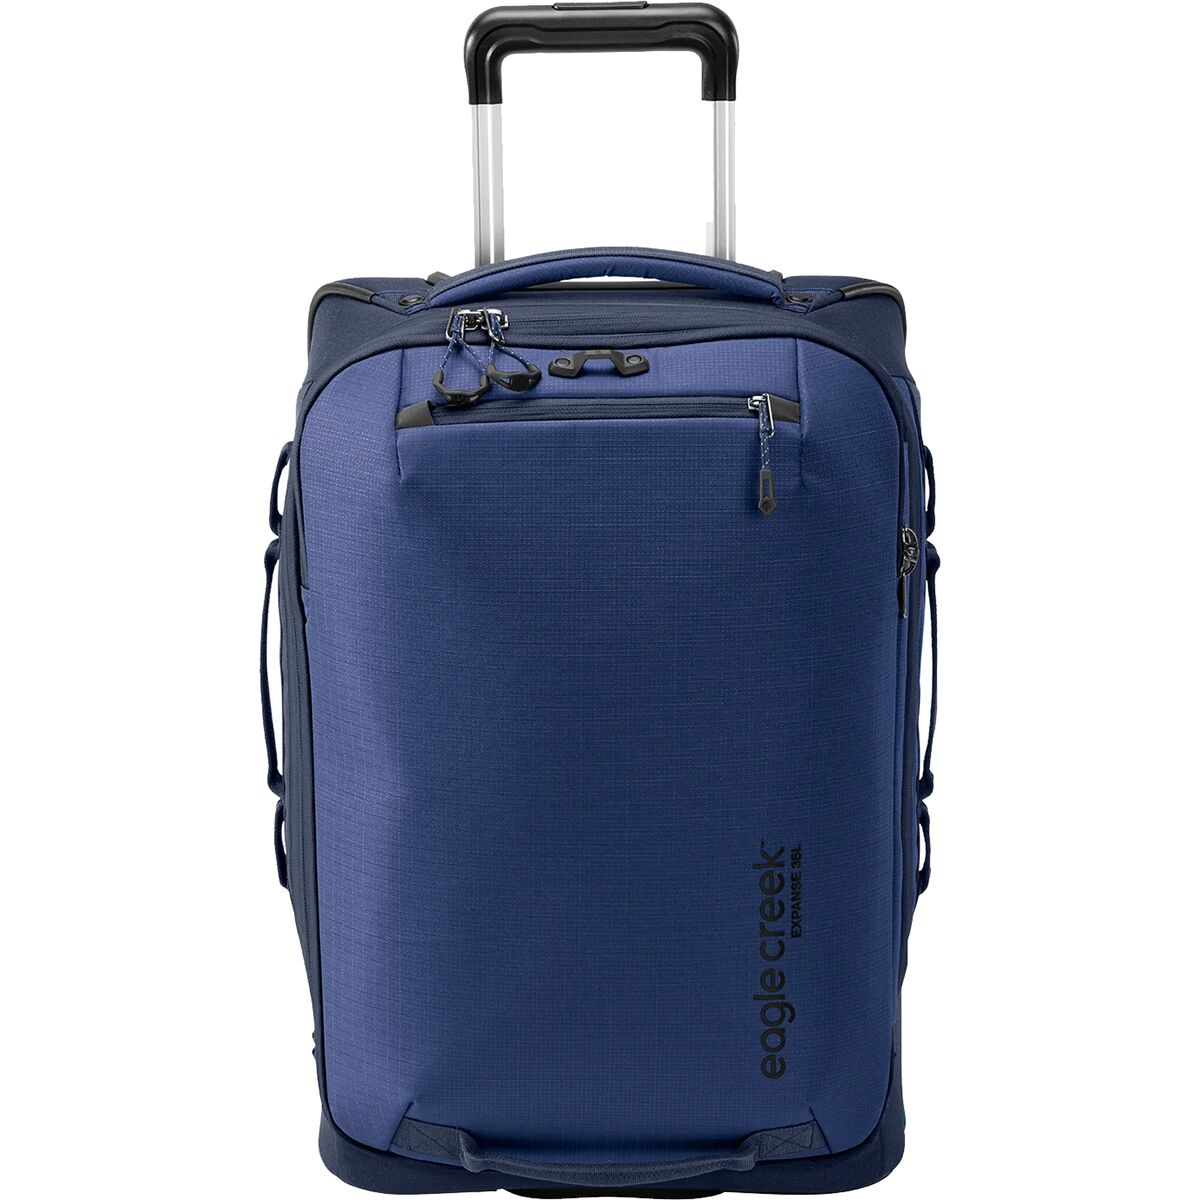 Expanse Convertible International Carryon Bag